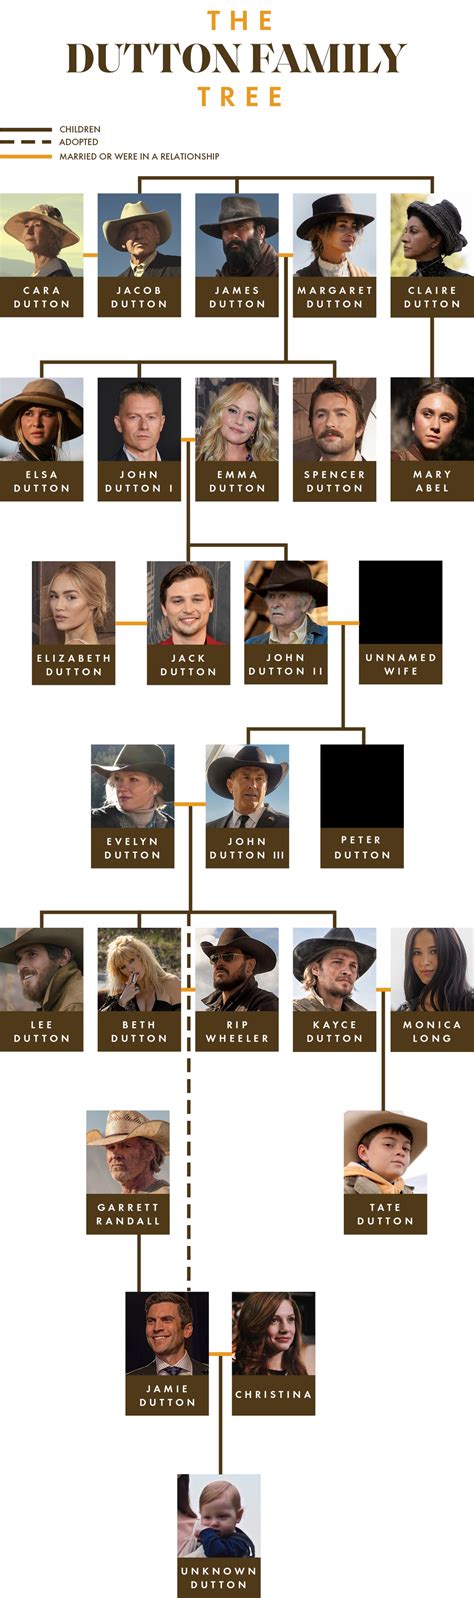 yellowstone family tree with photos